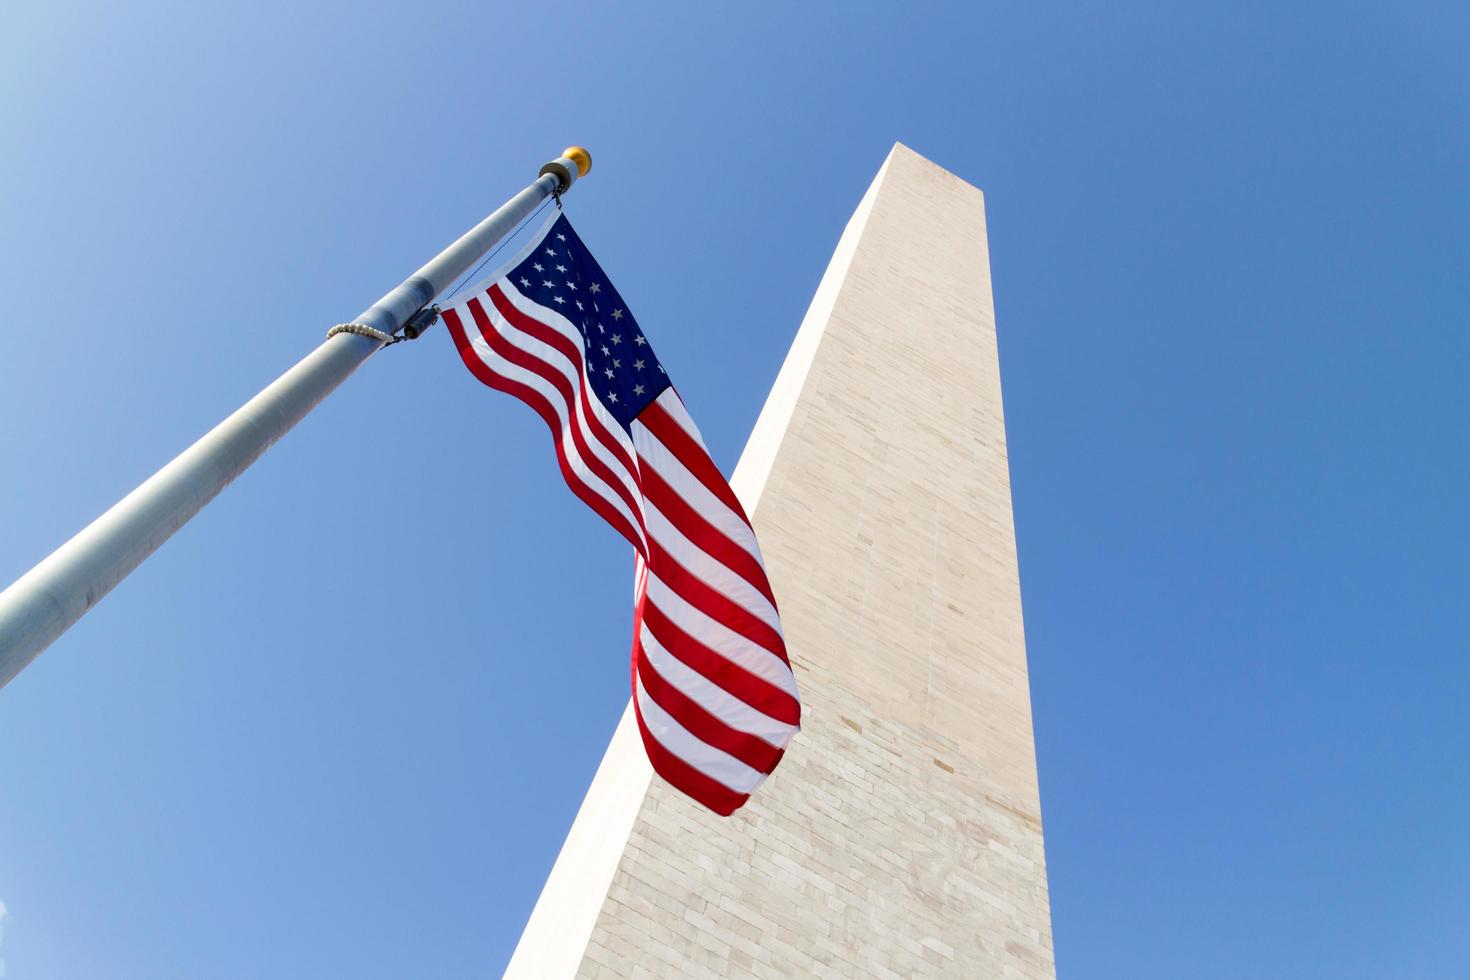 Washington-Denkmal an einem sonnigen Tag. foto